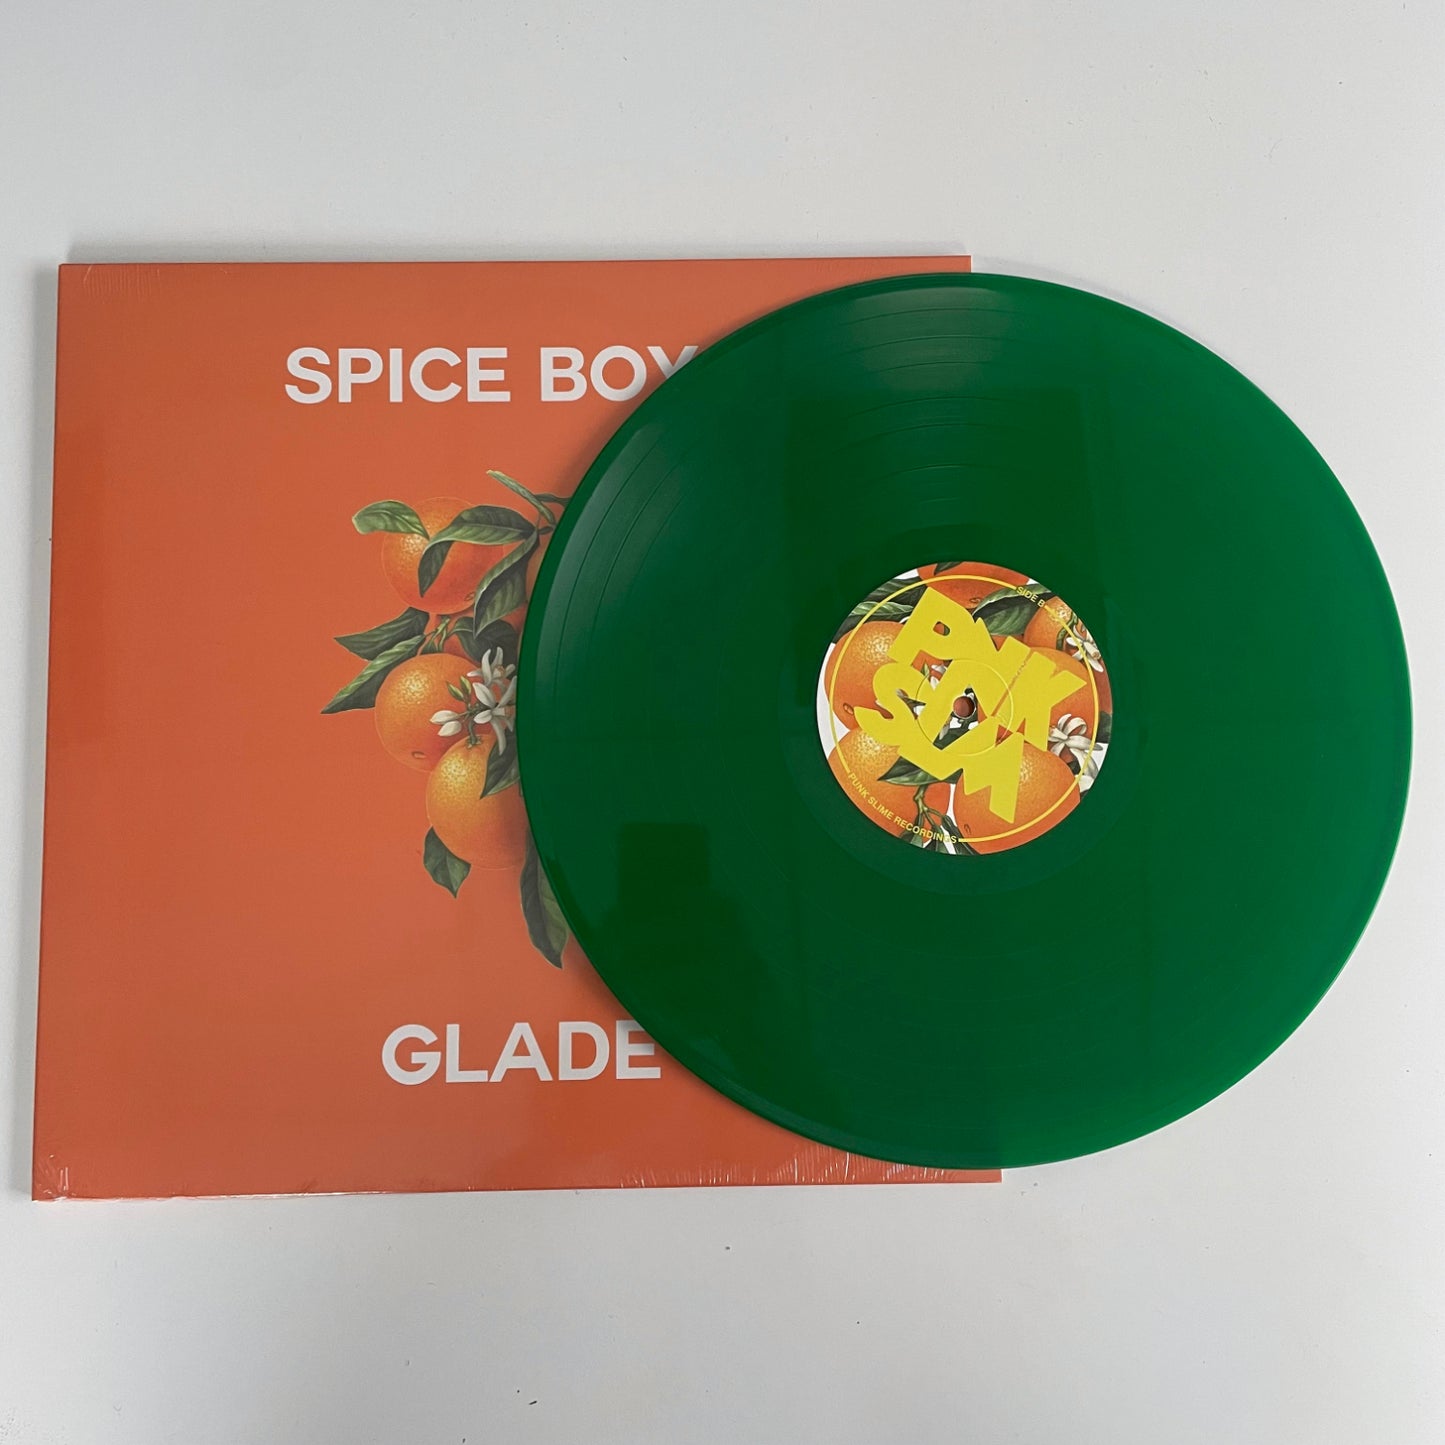 Spice Boys - Glade LP